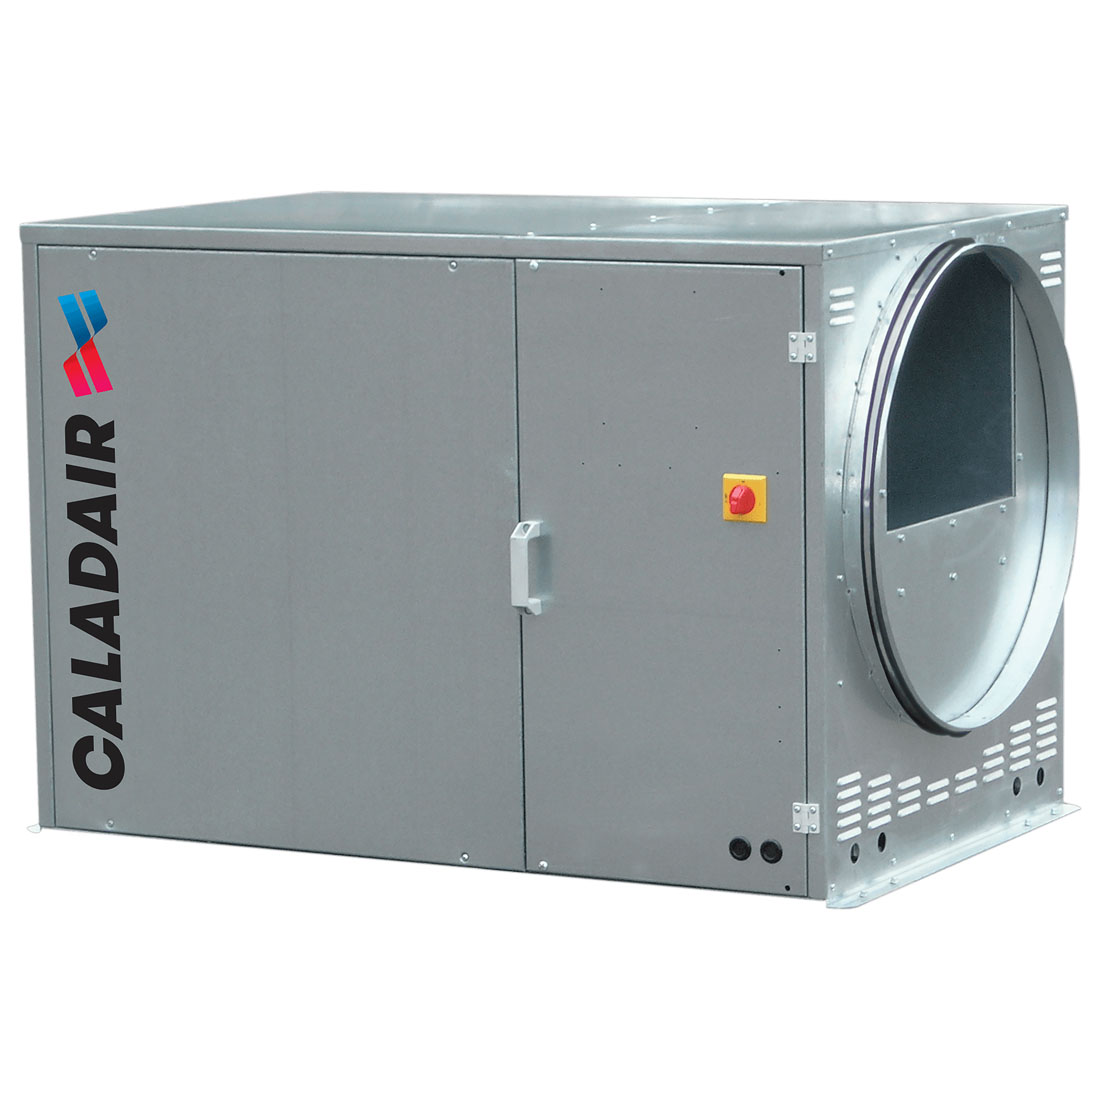 caladair-pyrostar-smoke-and-air-handling-unit-bpc-ventilation